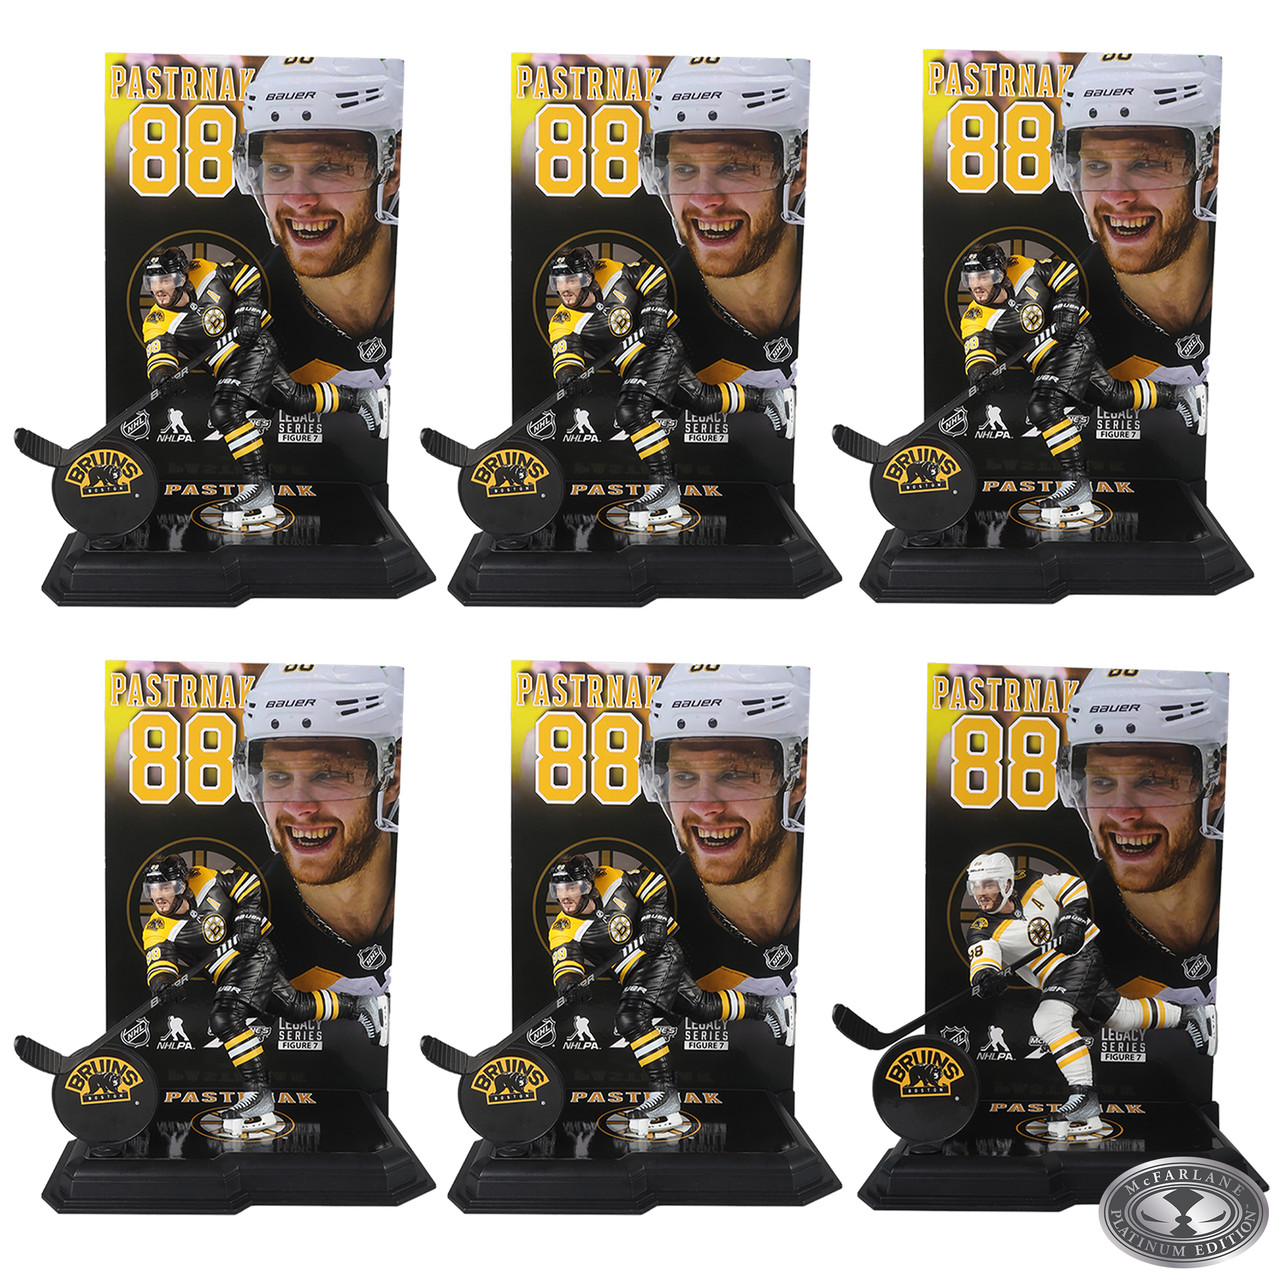 David Pastrnak (Boston Bruins) NHL 7 Figure McFarlane's Sportspicks (Pre-Order Ships December)